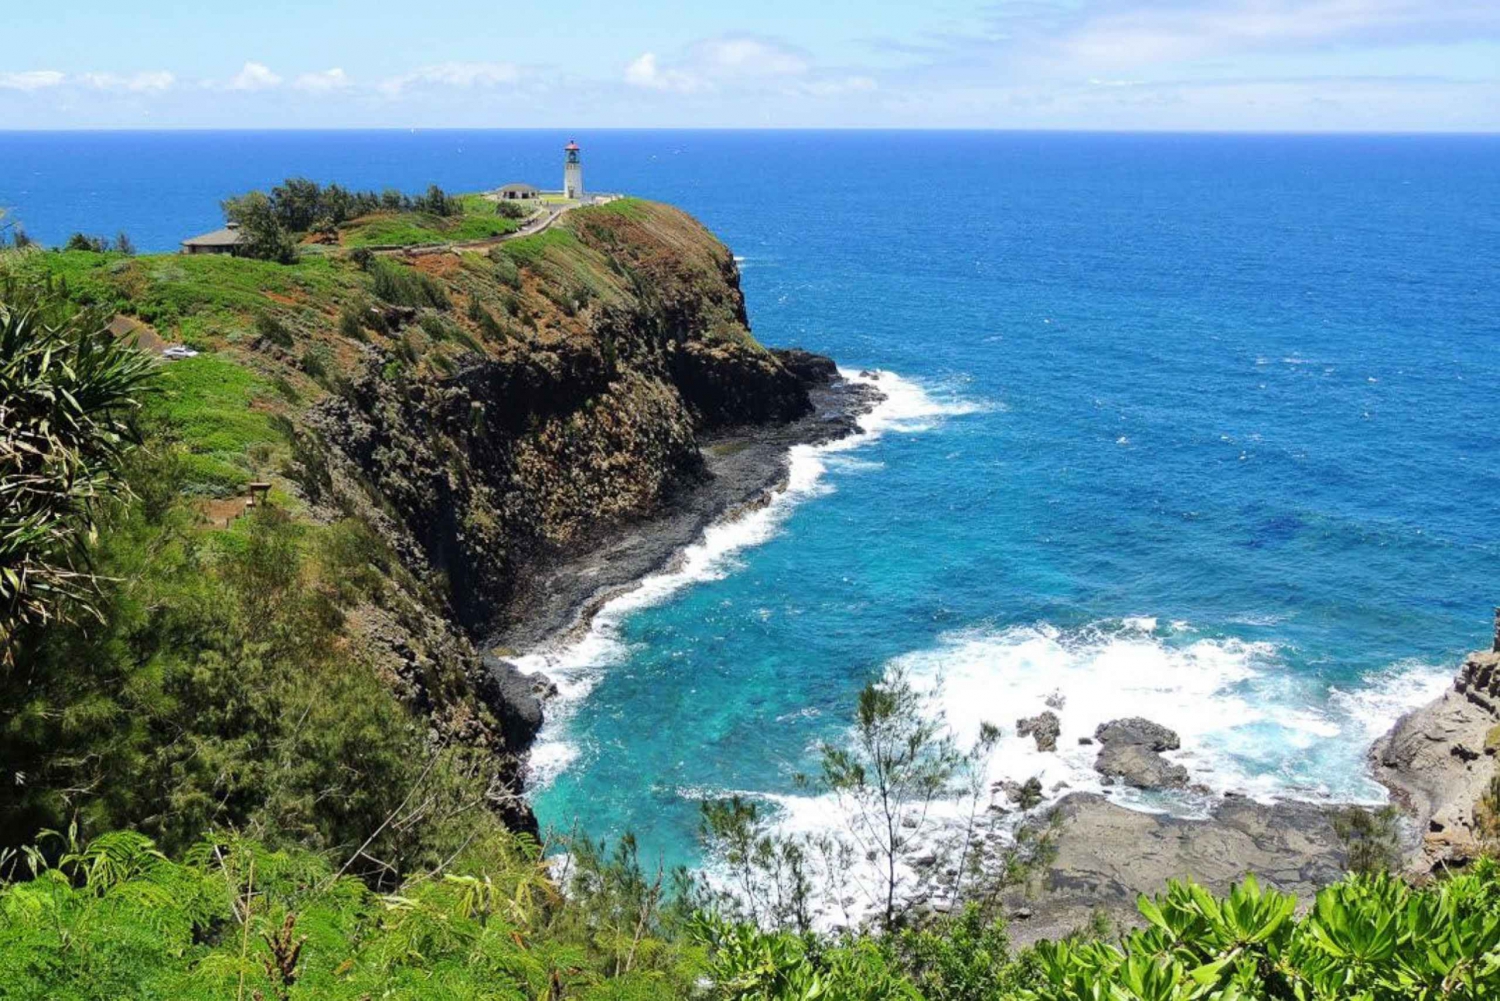 Kauai: Dagvullende tour met Fern Grotto riviercruise